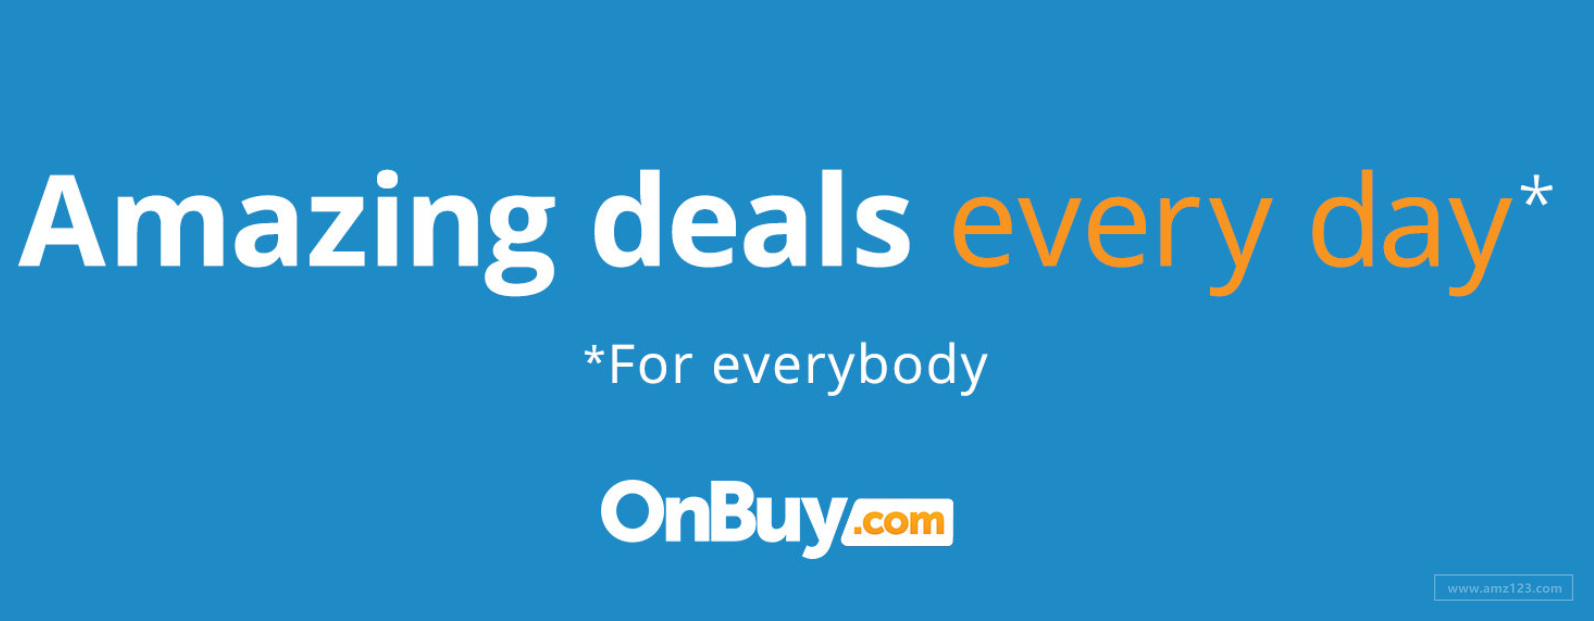 跨境电商OnBuy推出“AmazingDealsEveryDay”活动与PrimeDay竞争